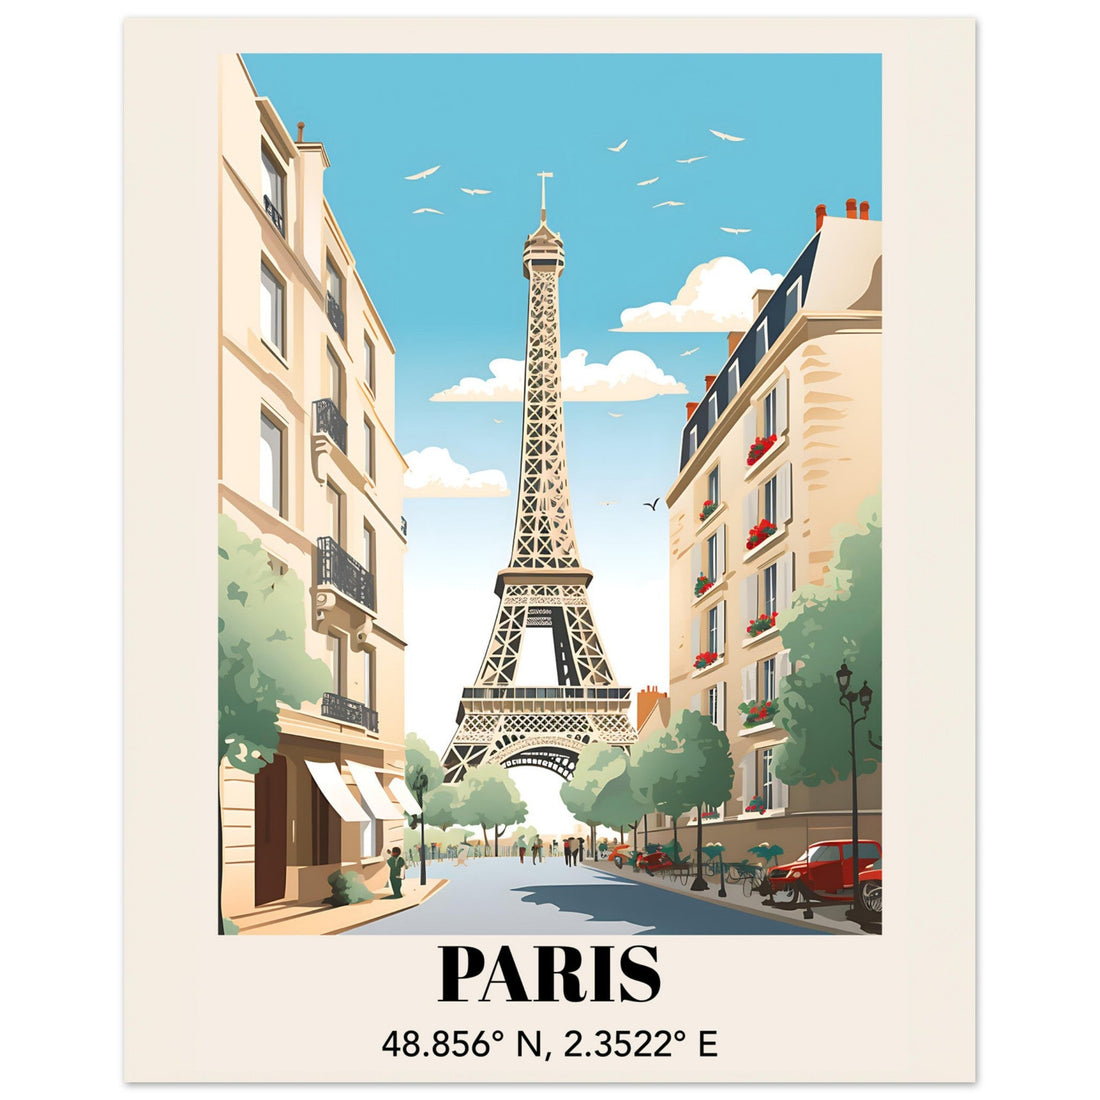 Paris Latitude Longitude Coordinates, france, paris, Travel Poster, #illieeart #